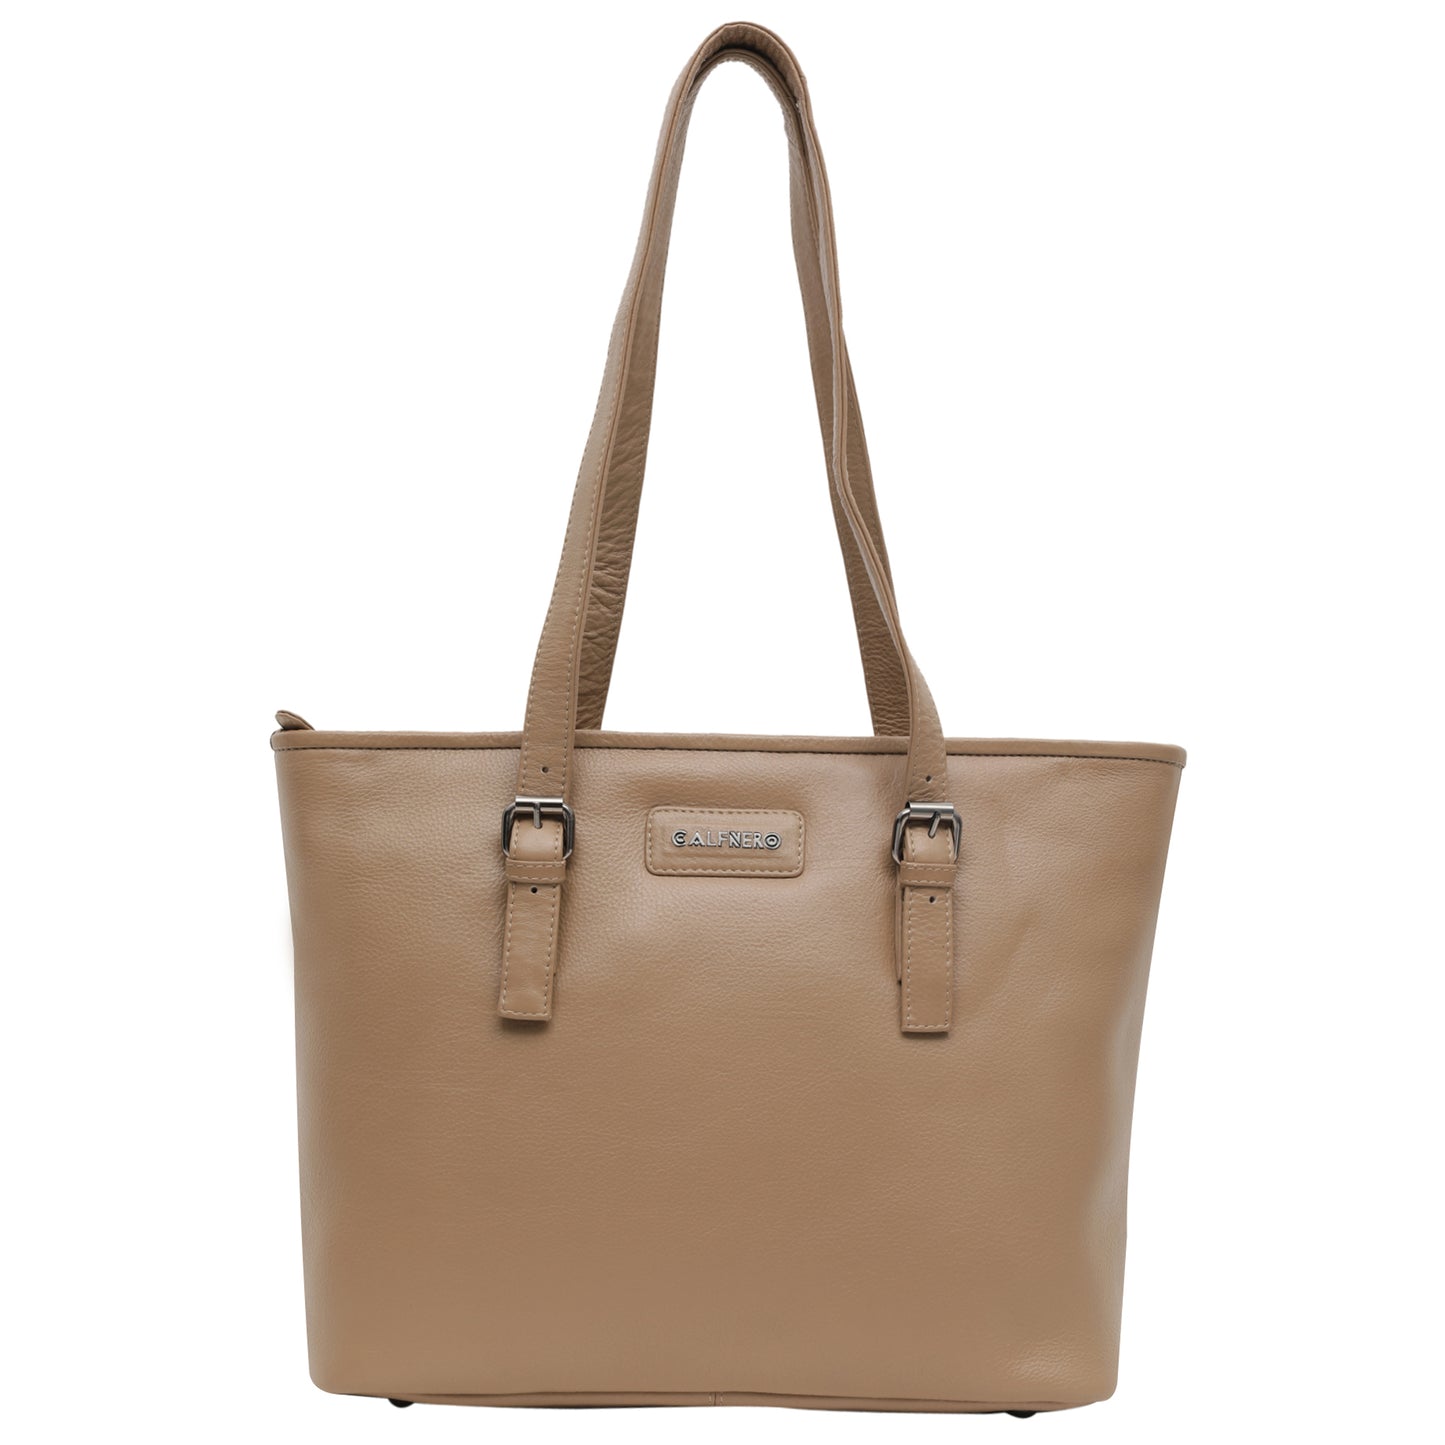 Calfnero Women's Genuine Leather Shoulder Bag (CON-3-Beige)